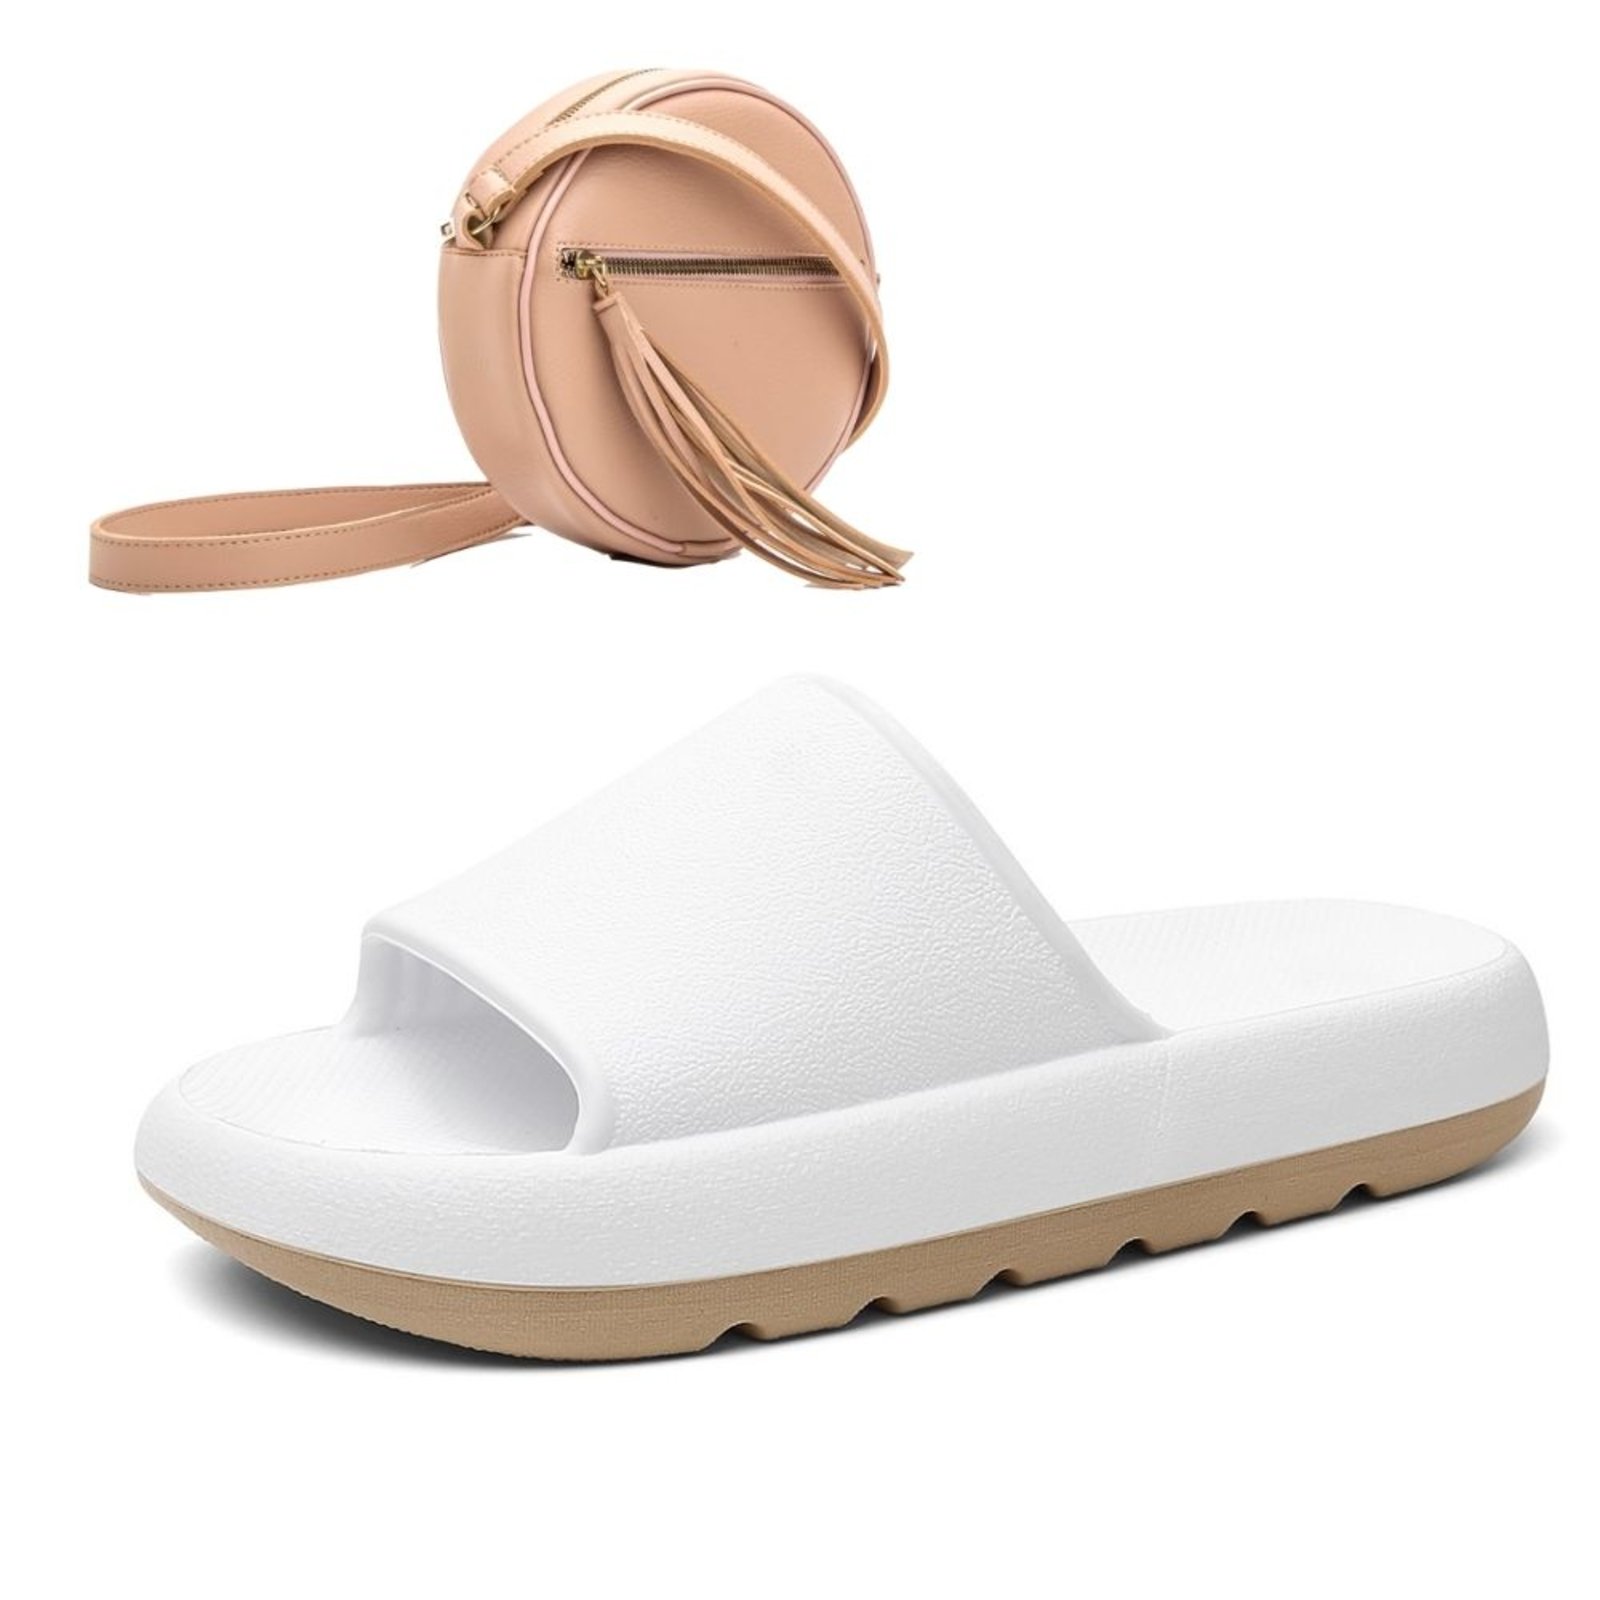 Chinelo Nuvem Slide Mr Shoes Confortavel Branco   Bolsa Tiracolo Nude